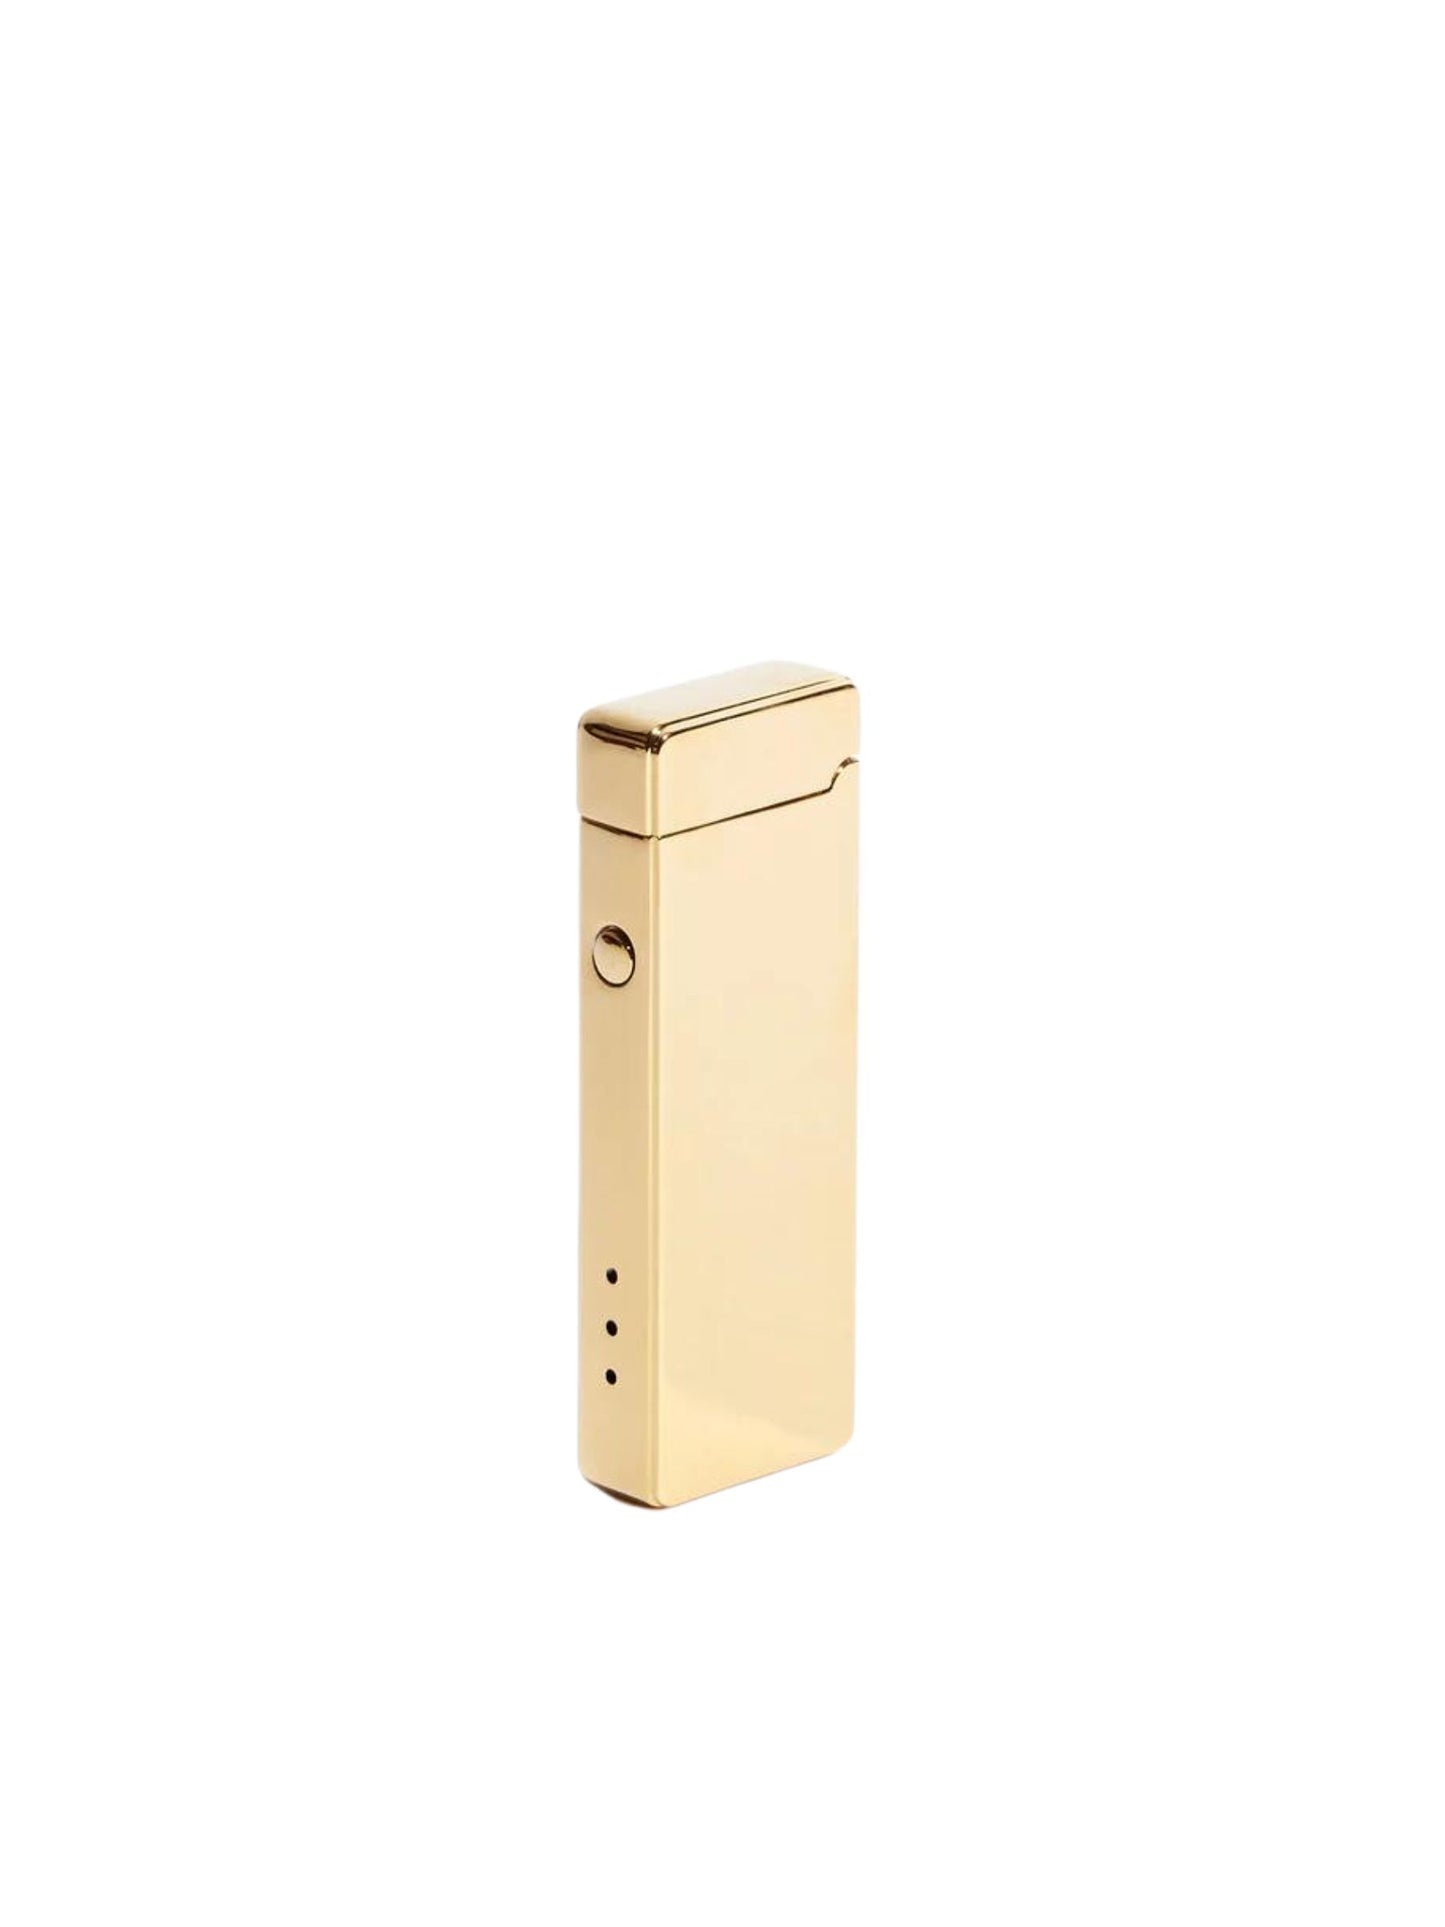 Gold - Slim Double Arc Lighter